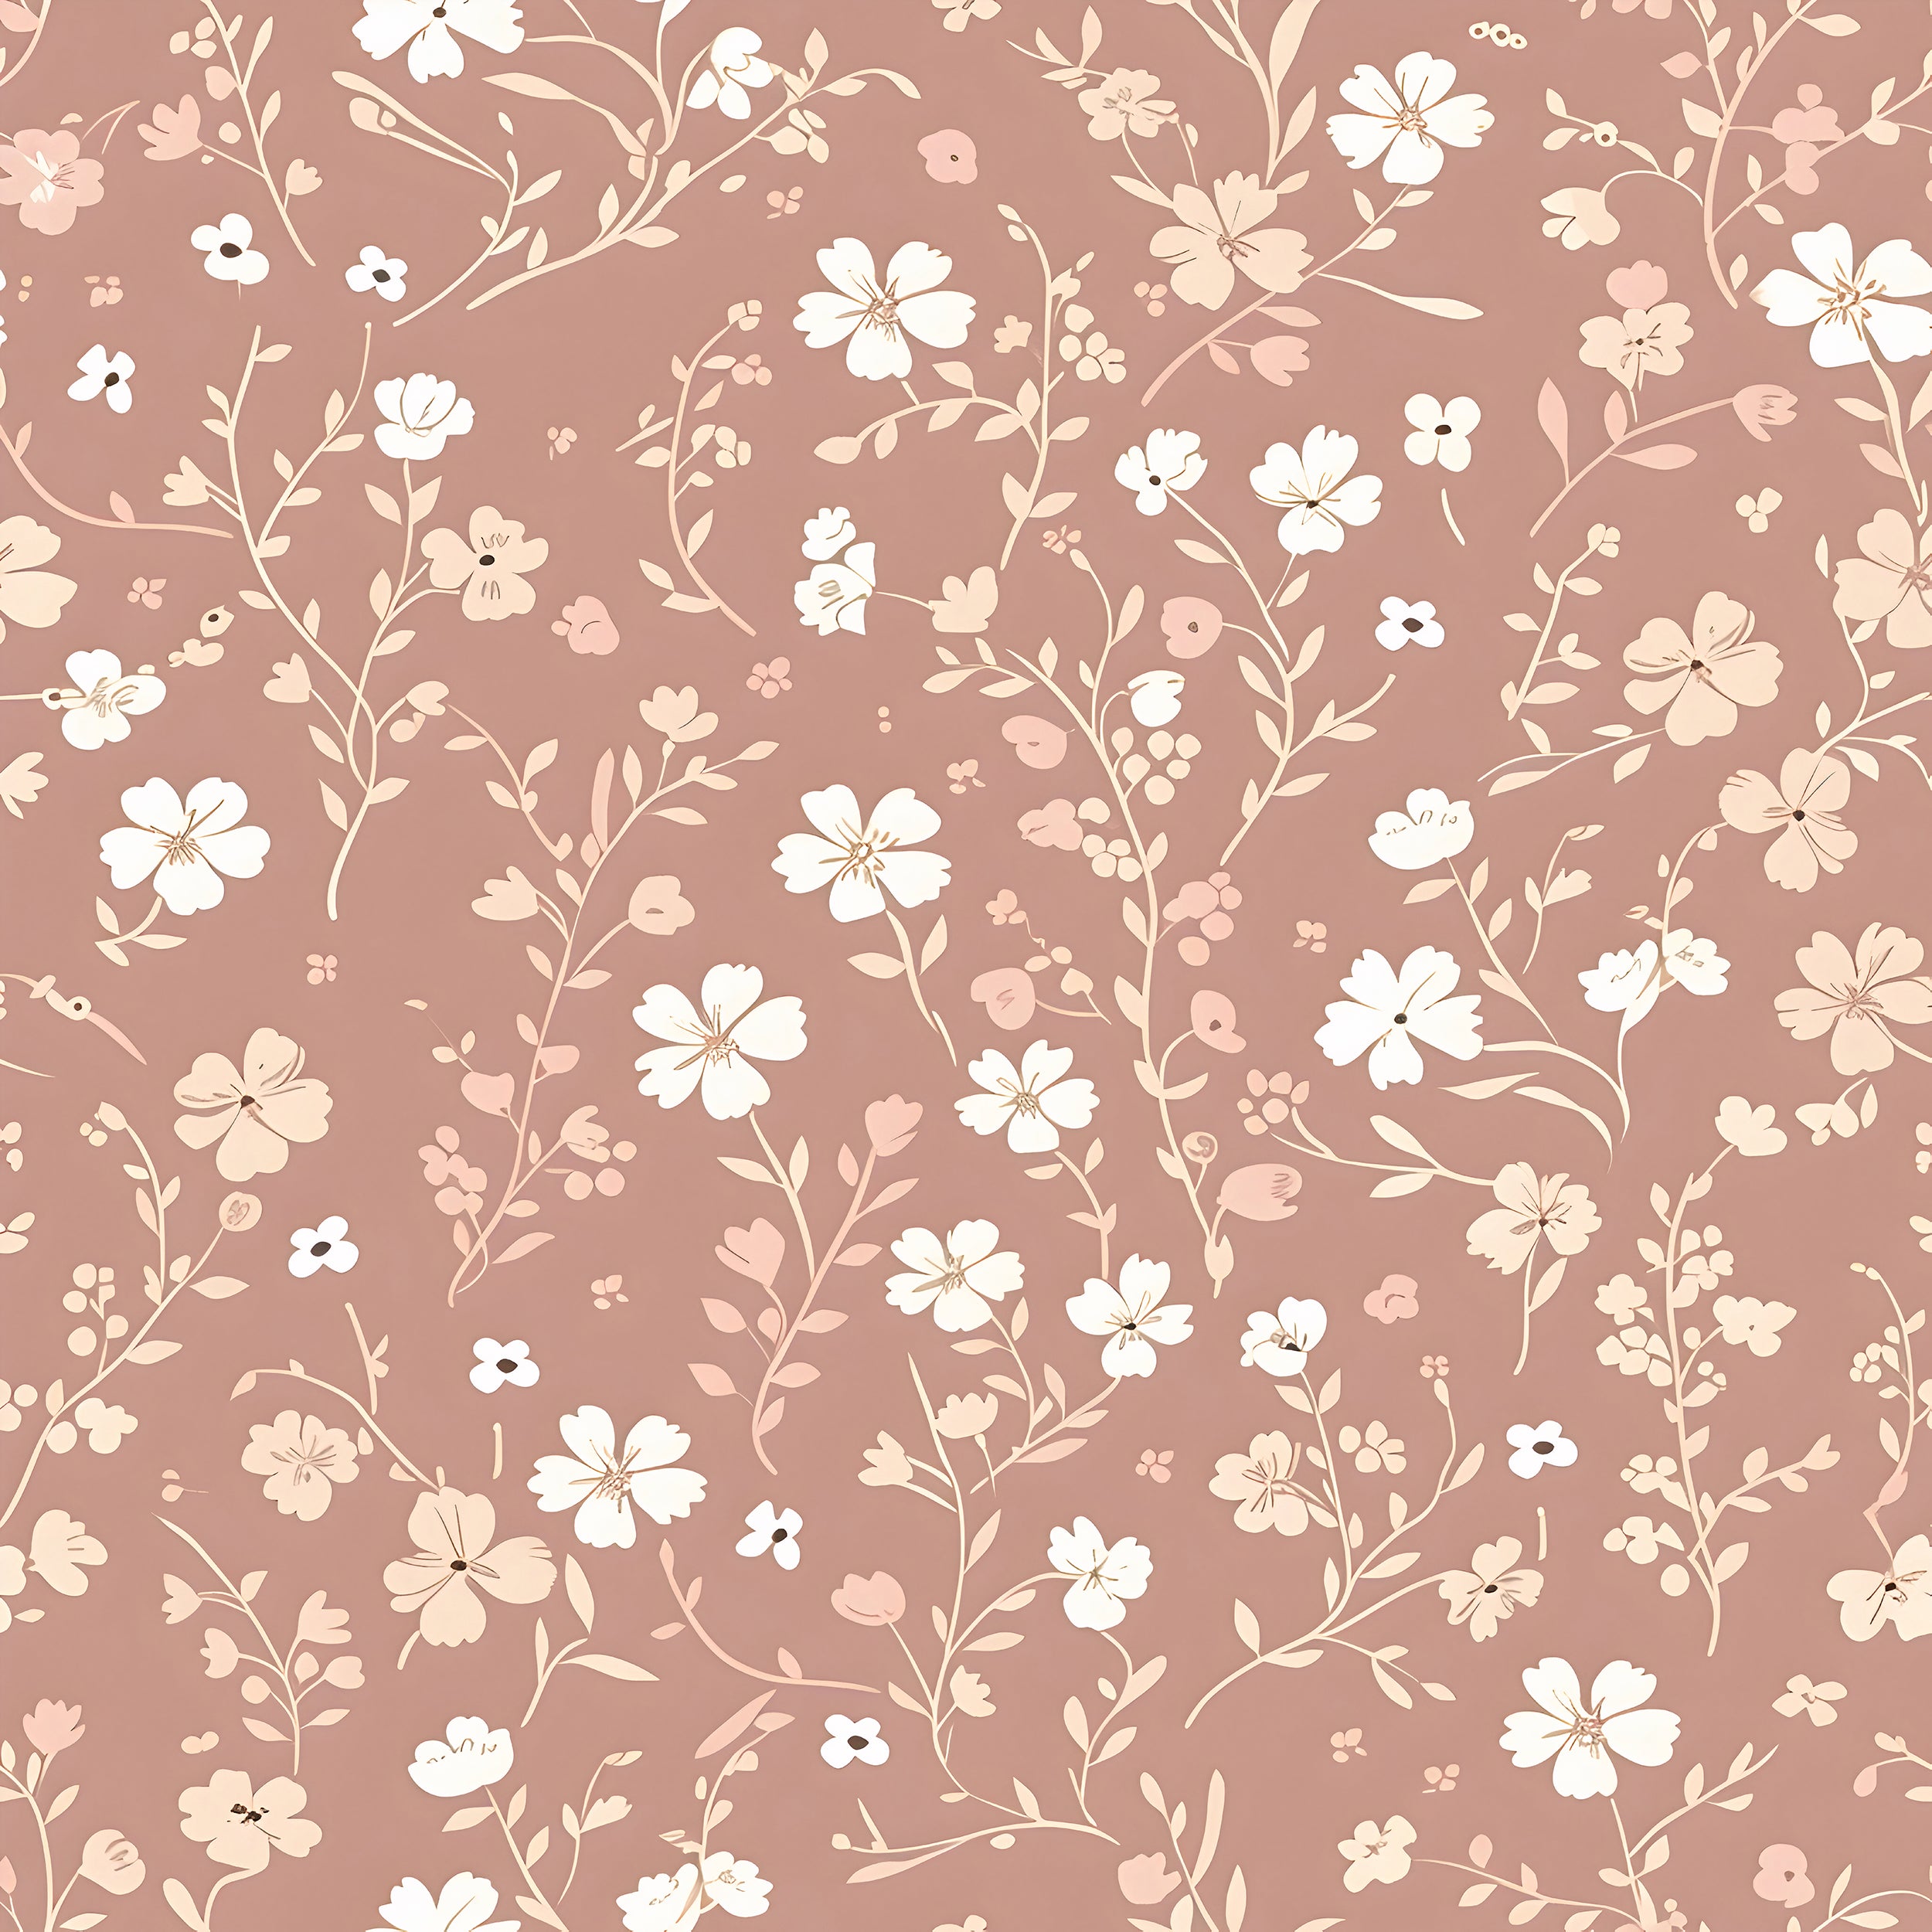 Self-adhesive Wild Flower Wallpaper